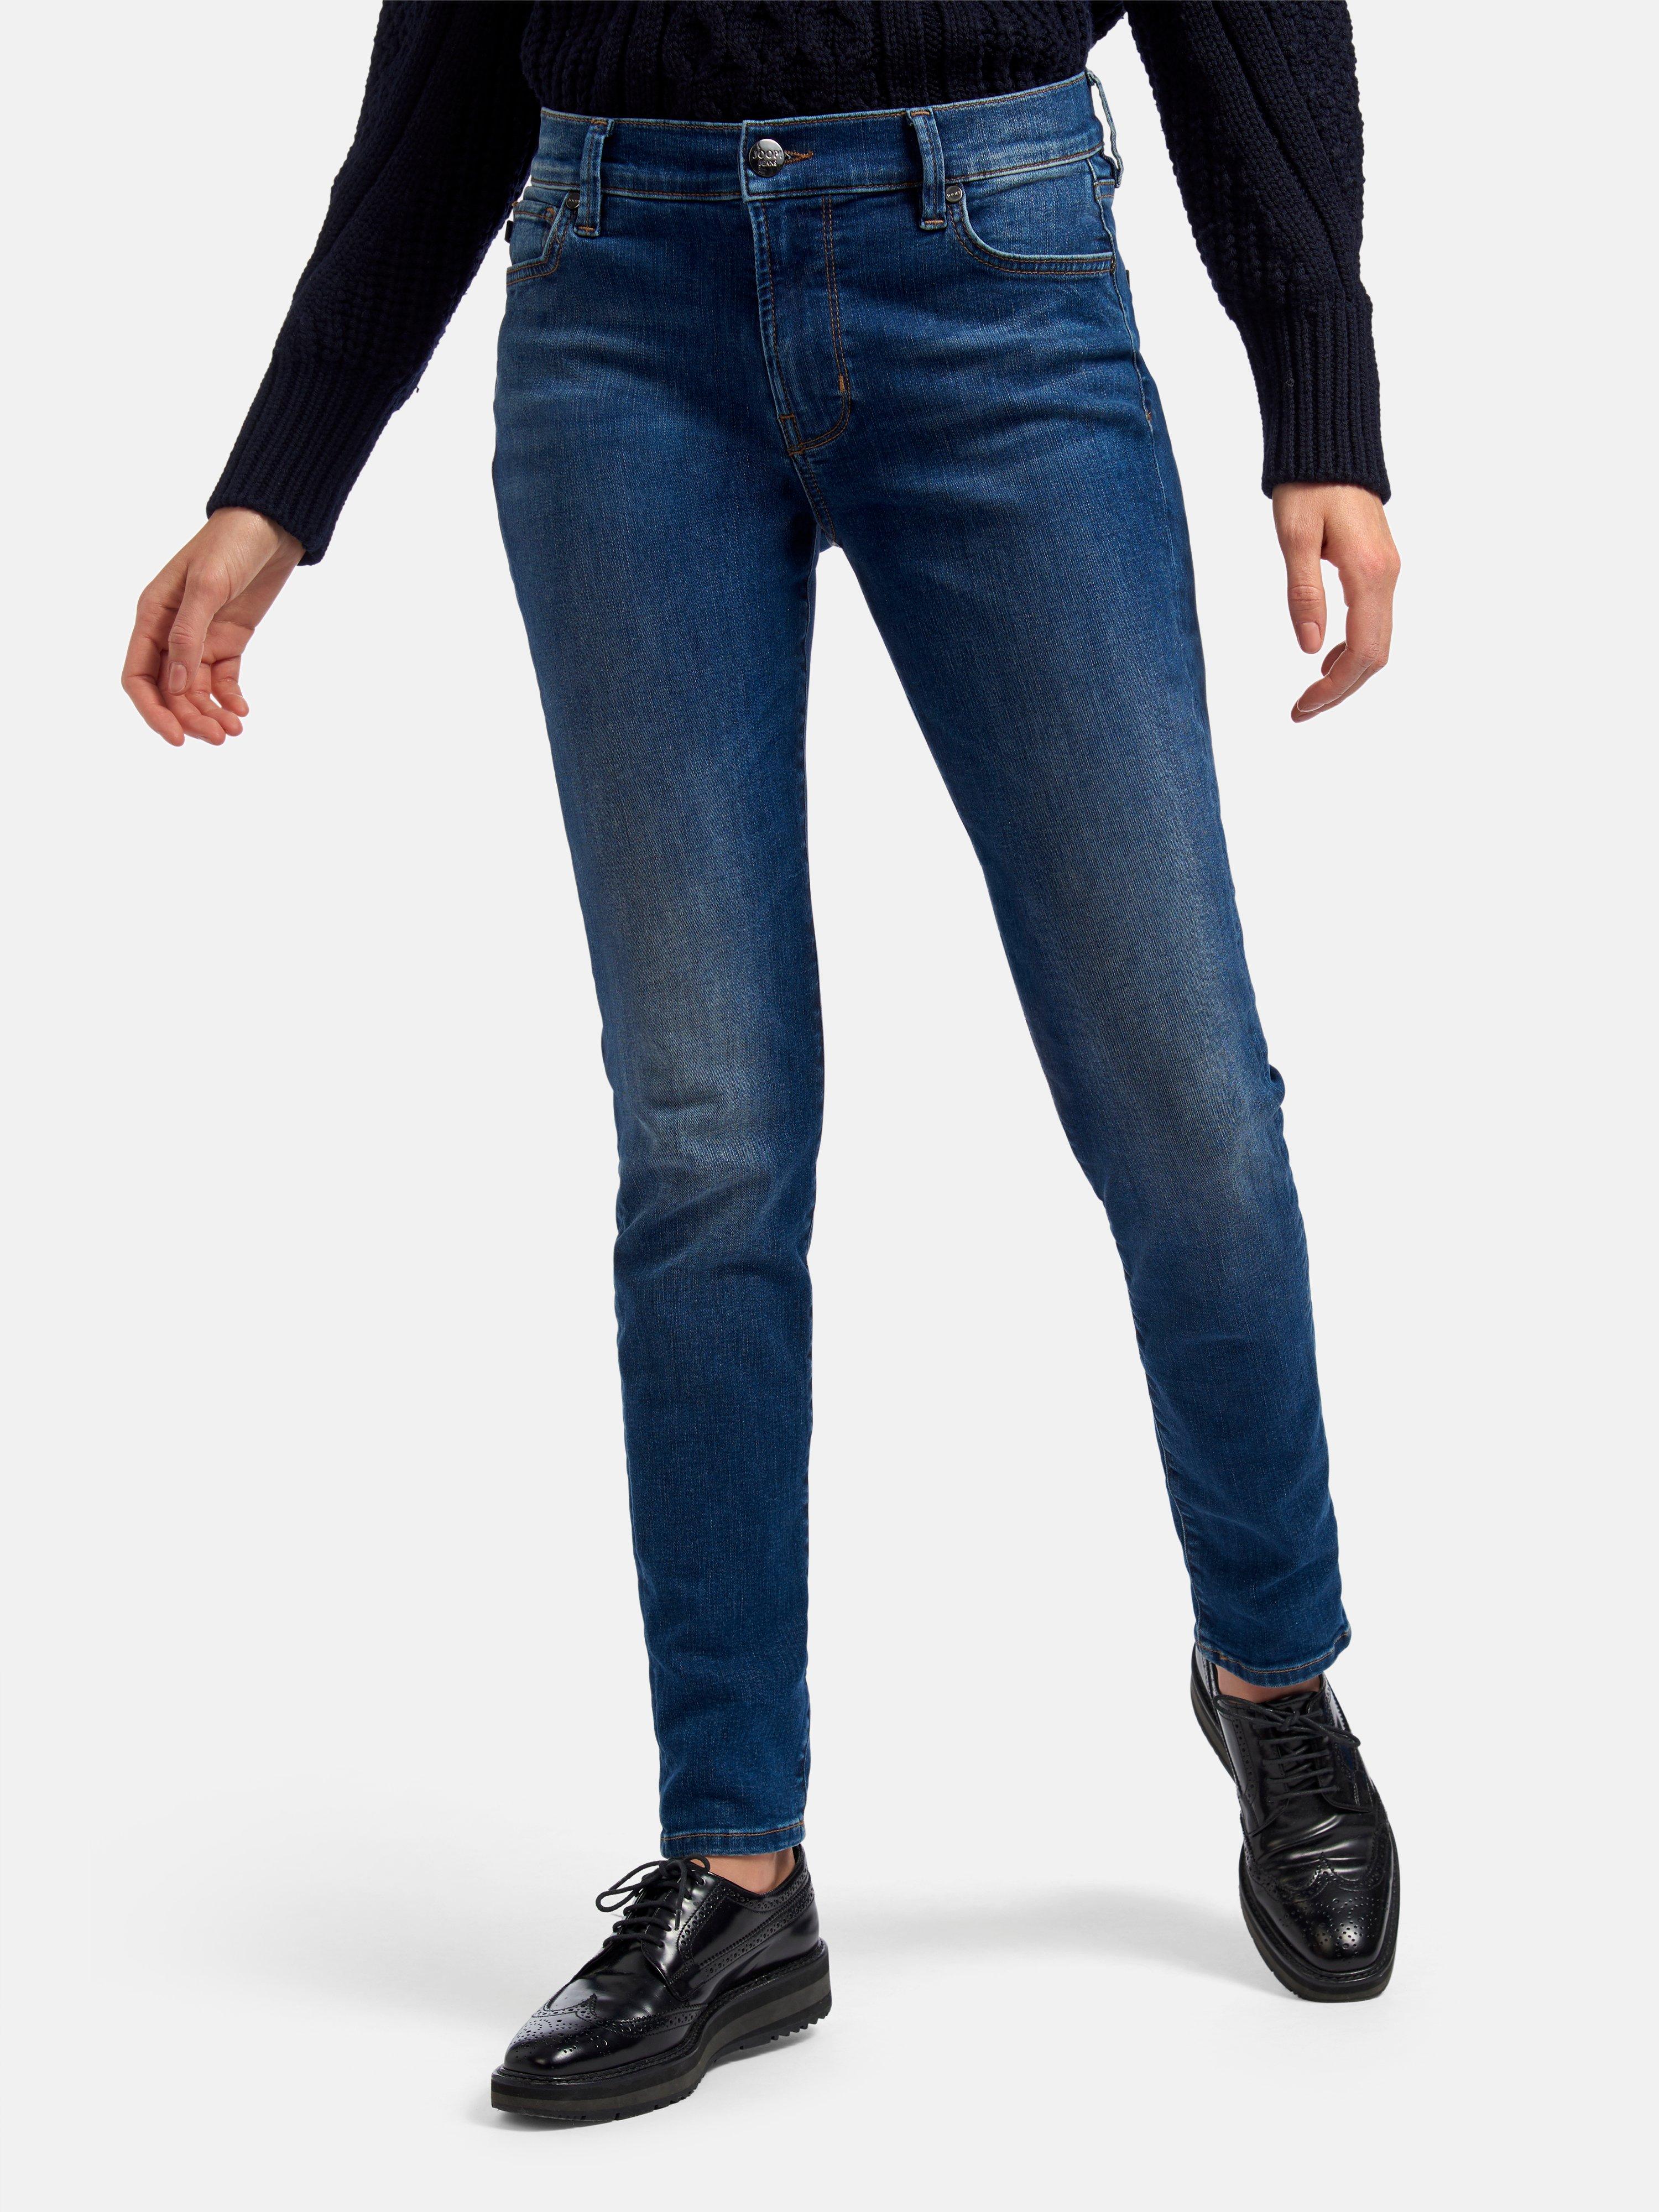 Joop! - Ankle-length - Fit Slim blue denim jeans